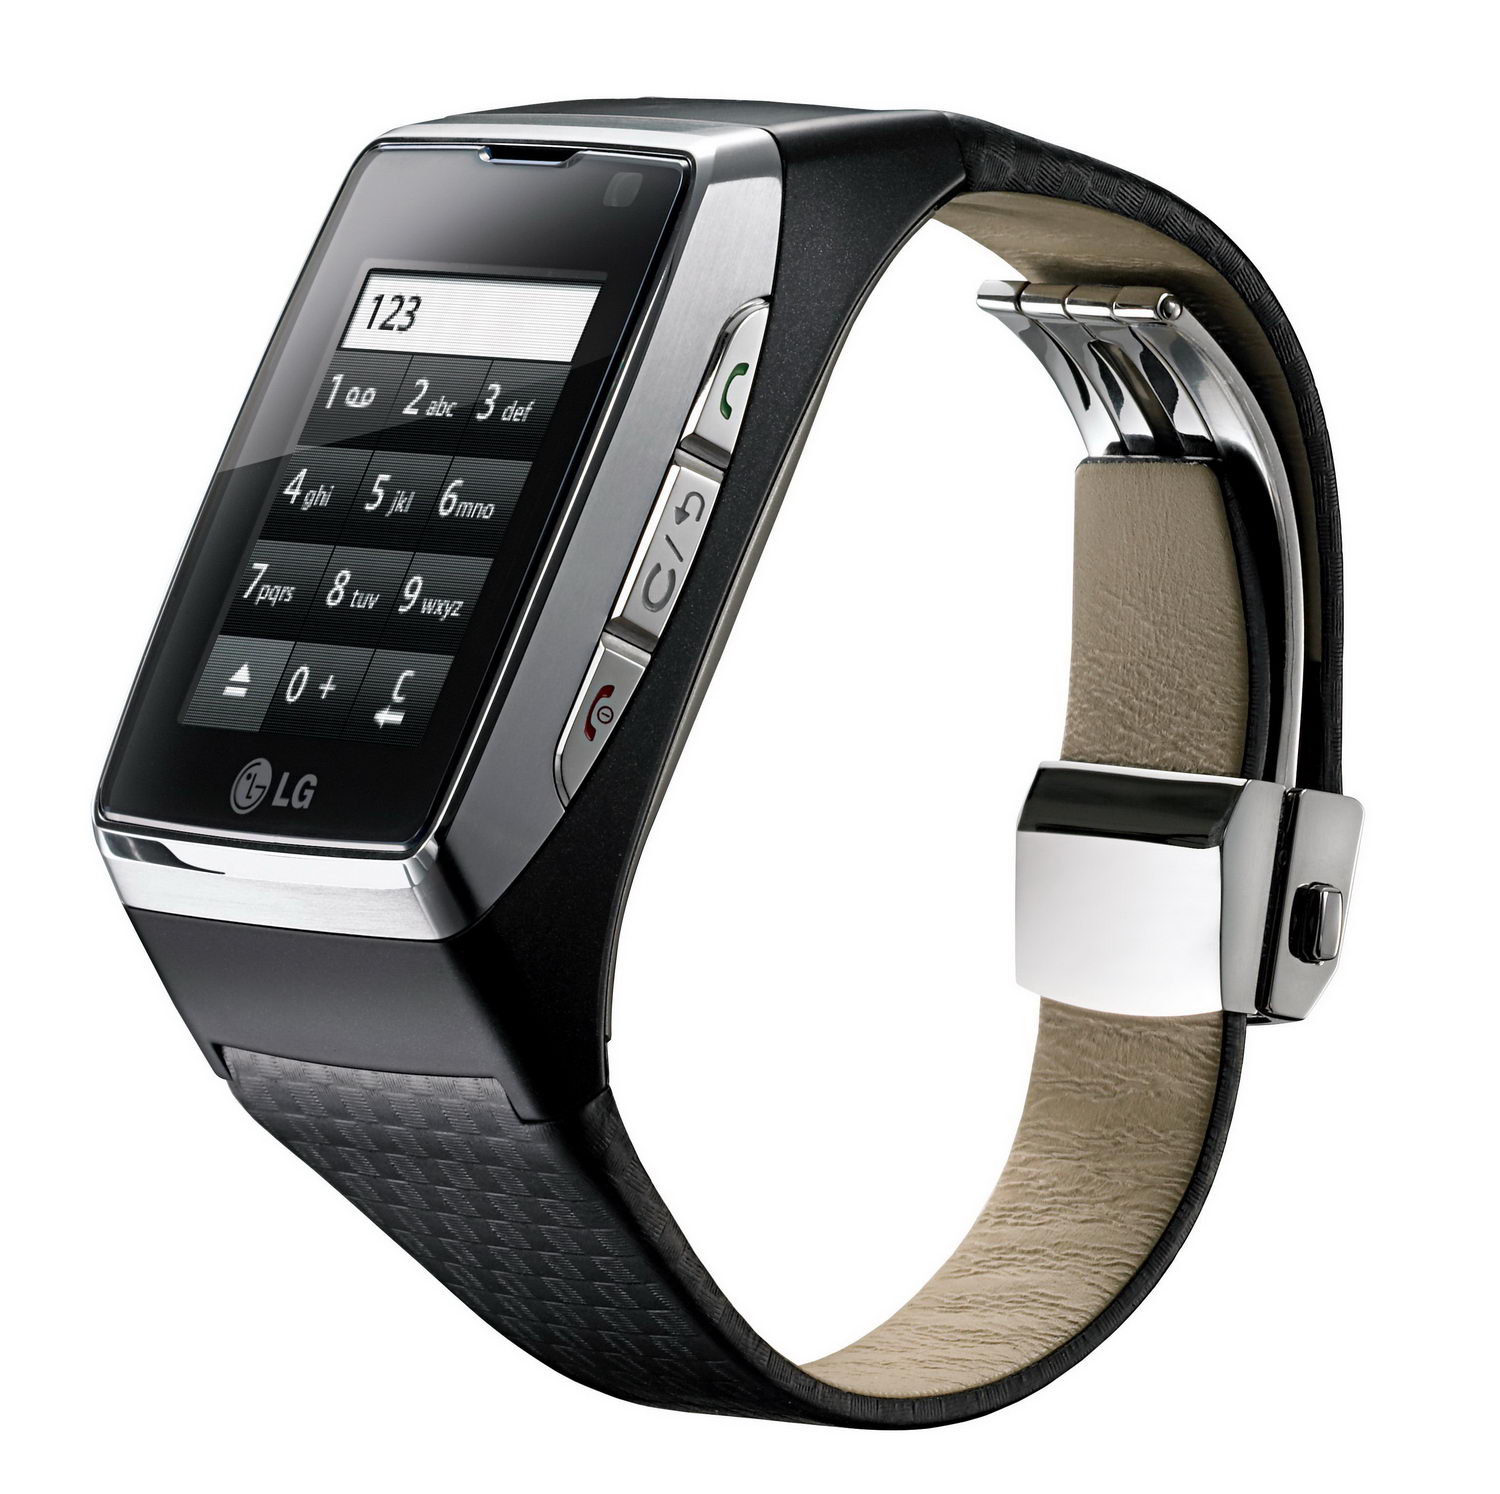 Часы мобильная связь. Часофон LG gd910. LG SMARTWATCH. Watch Phone LG. LG Smart часы.